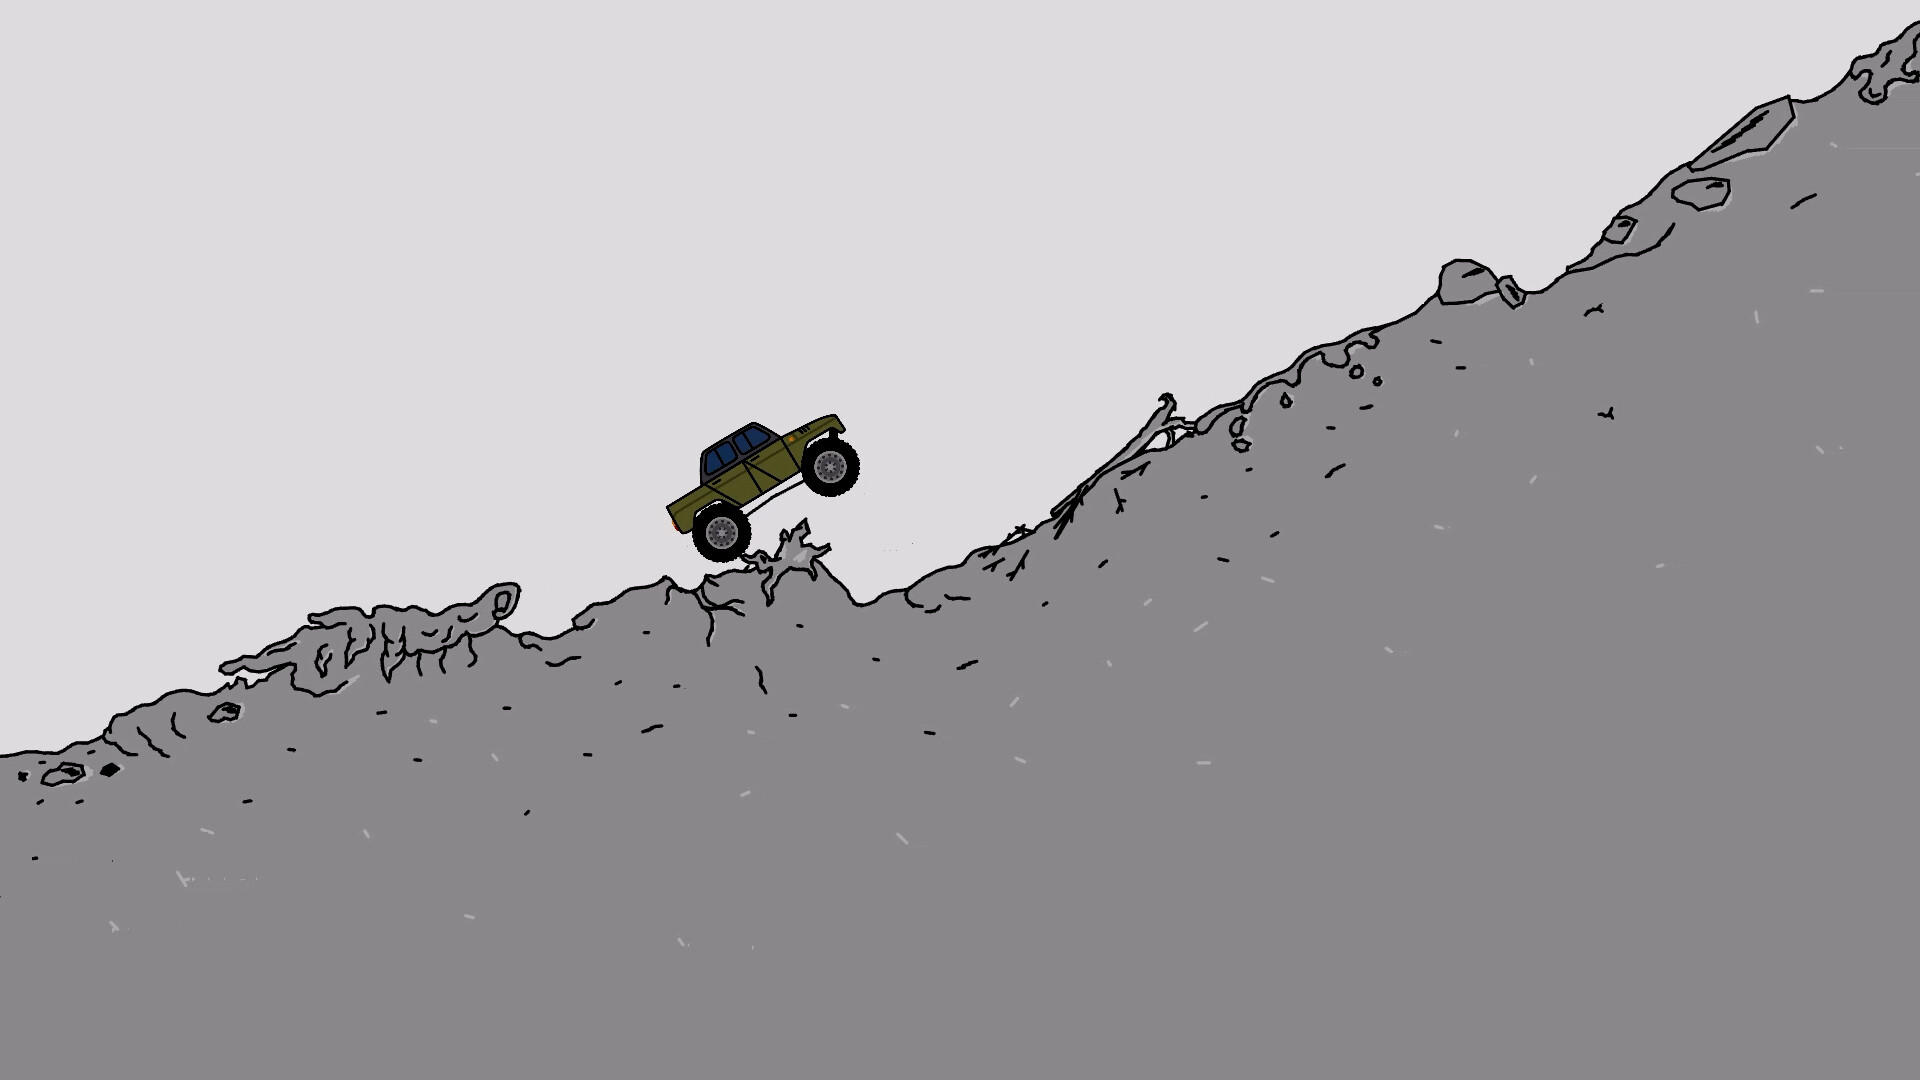 Screenshot of Draw Rider Remake